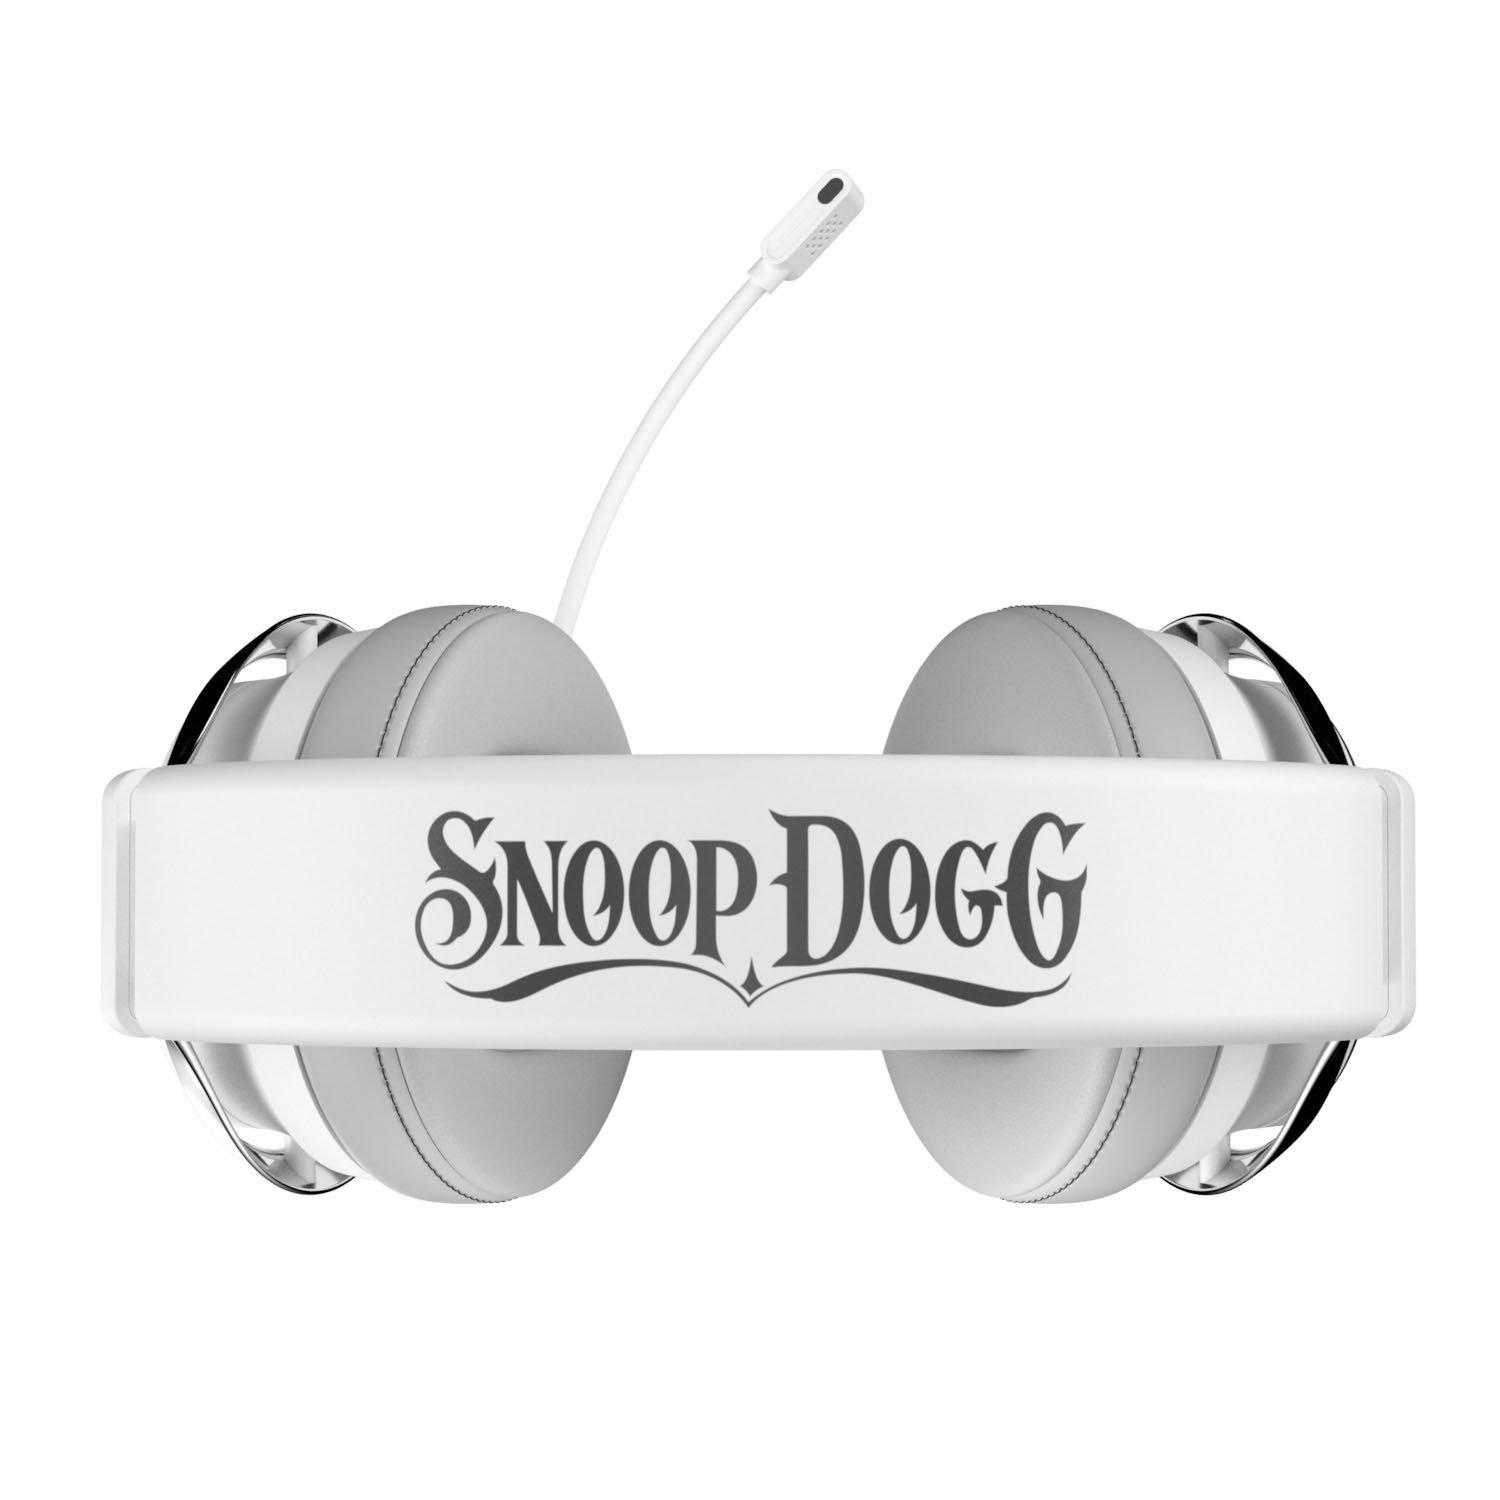 snoop dogg xbox headset